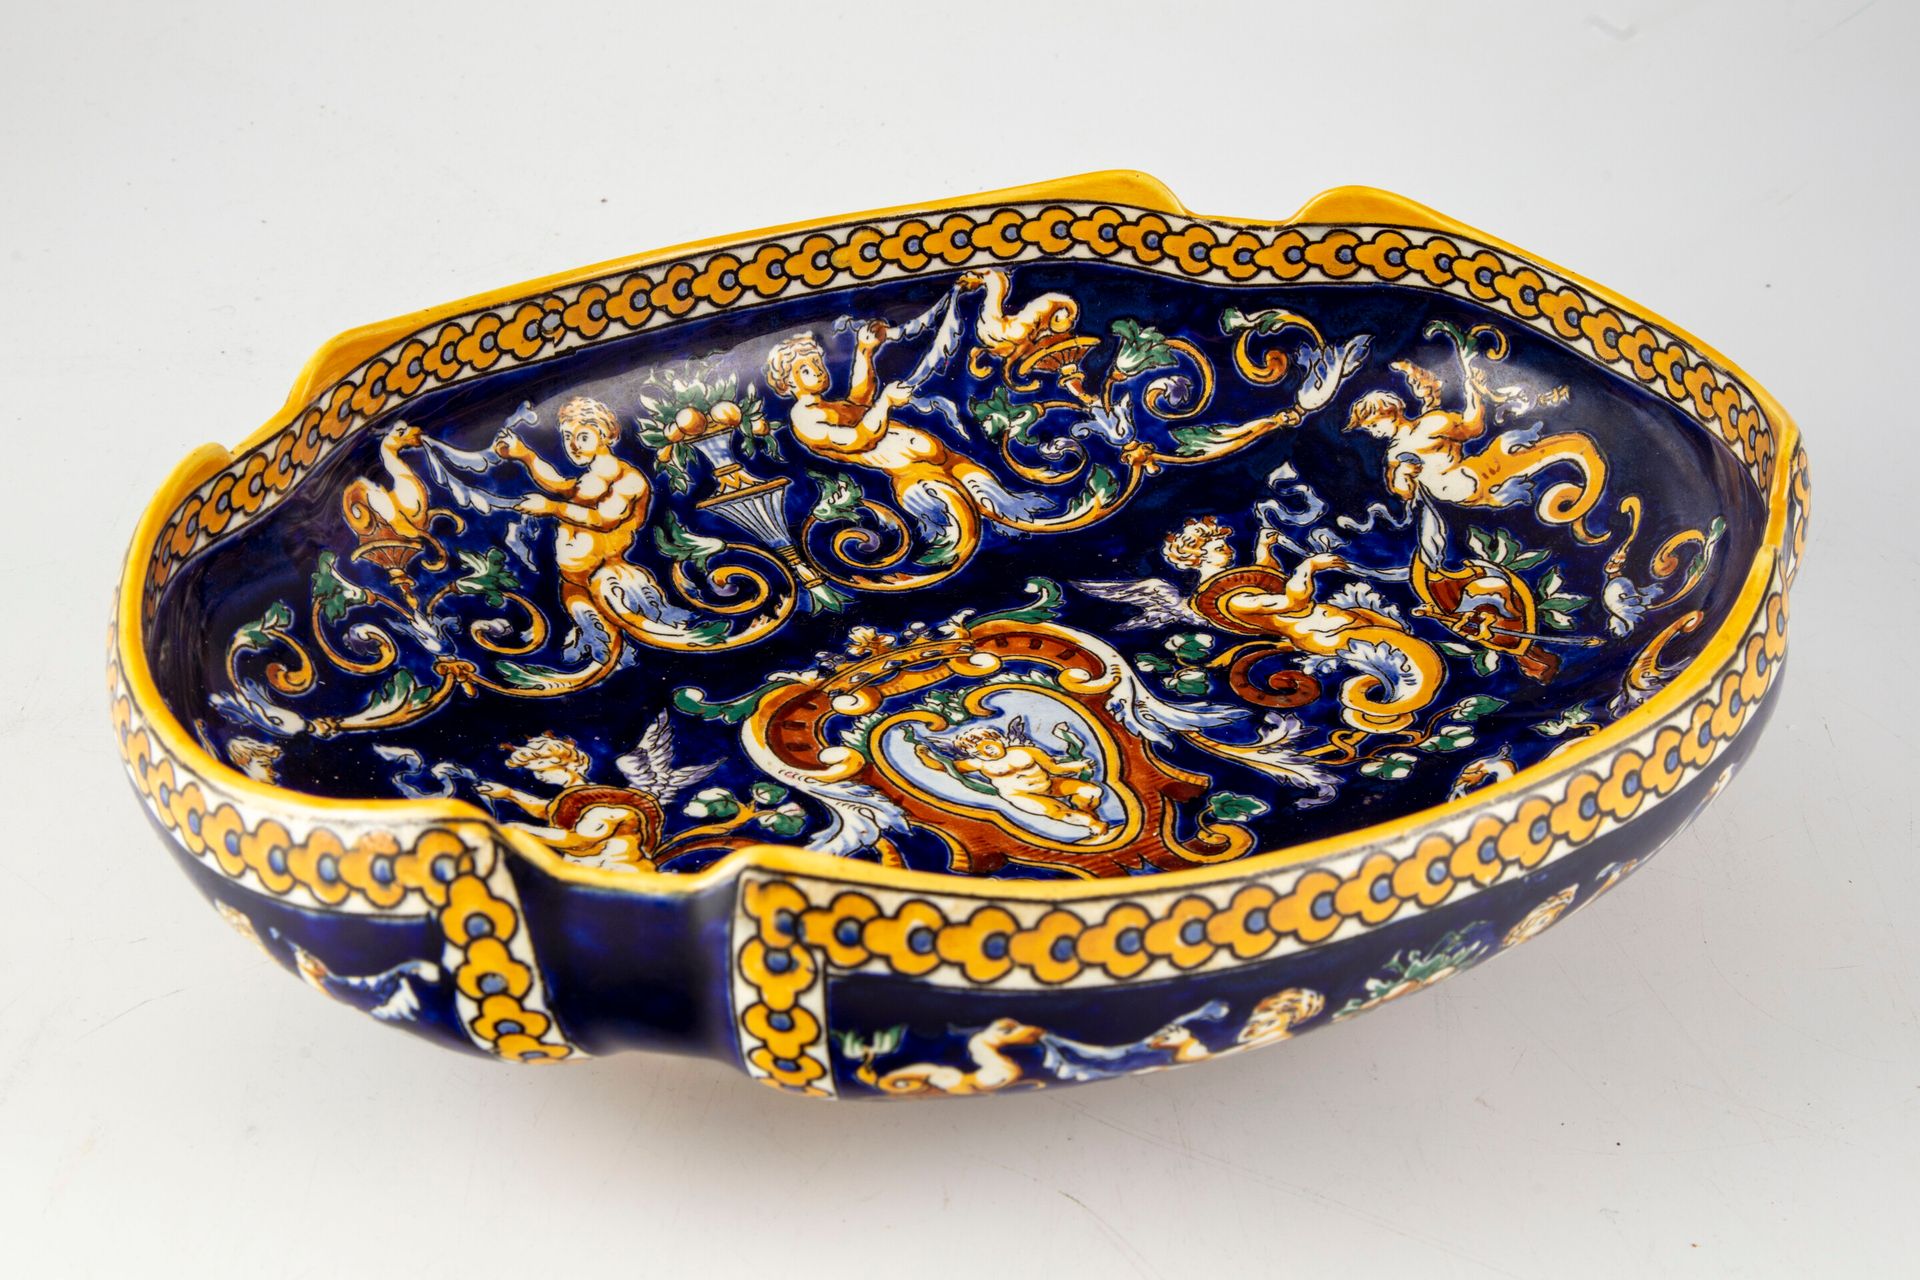 Null GIEN

新文艺复兴时期装饰的釉面陶器碗

H.7.5厘米；宽29.5厘米；长23.5厘米

一个小碎片